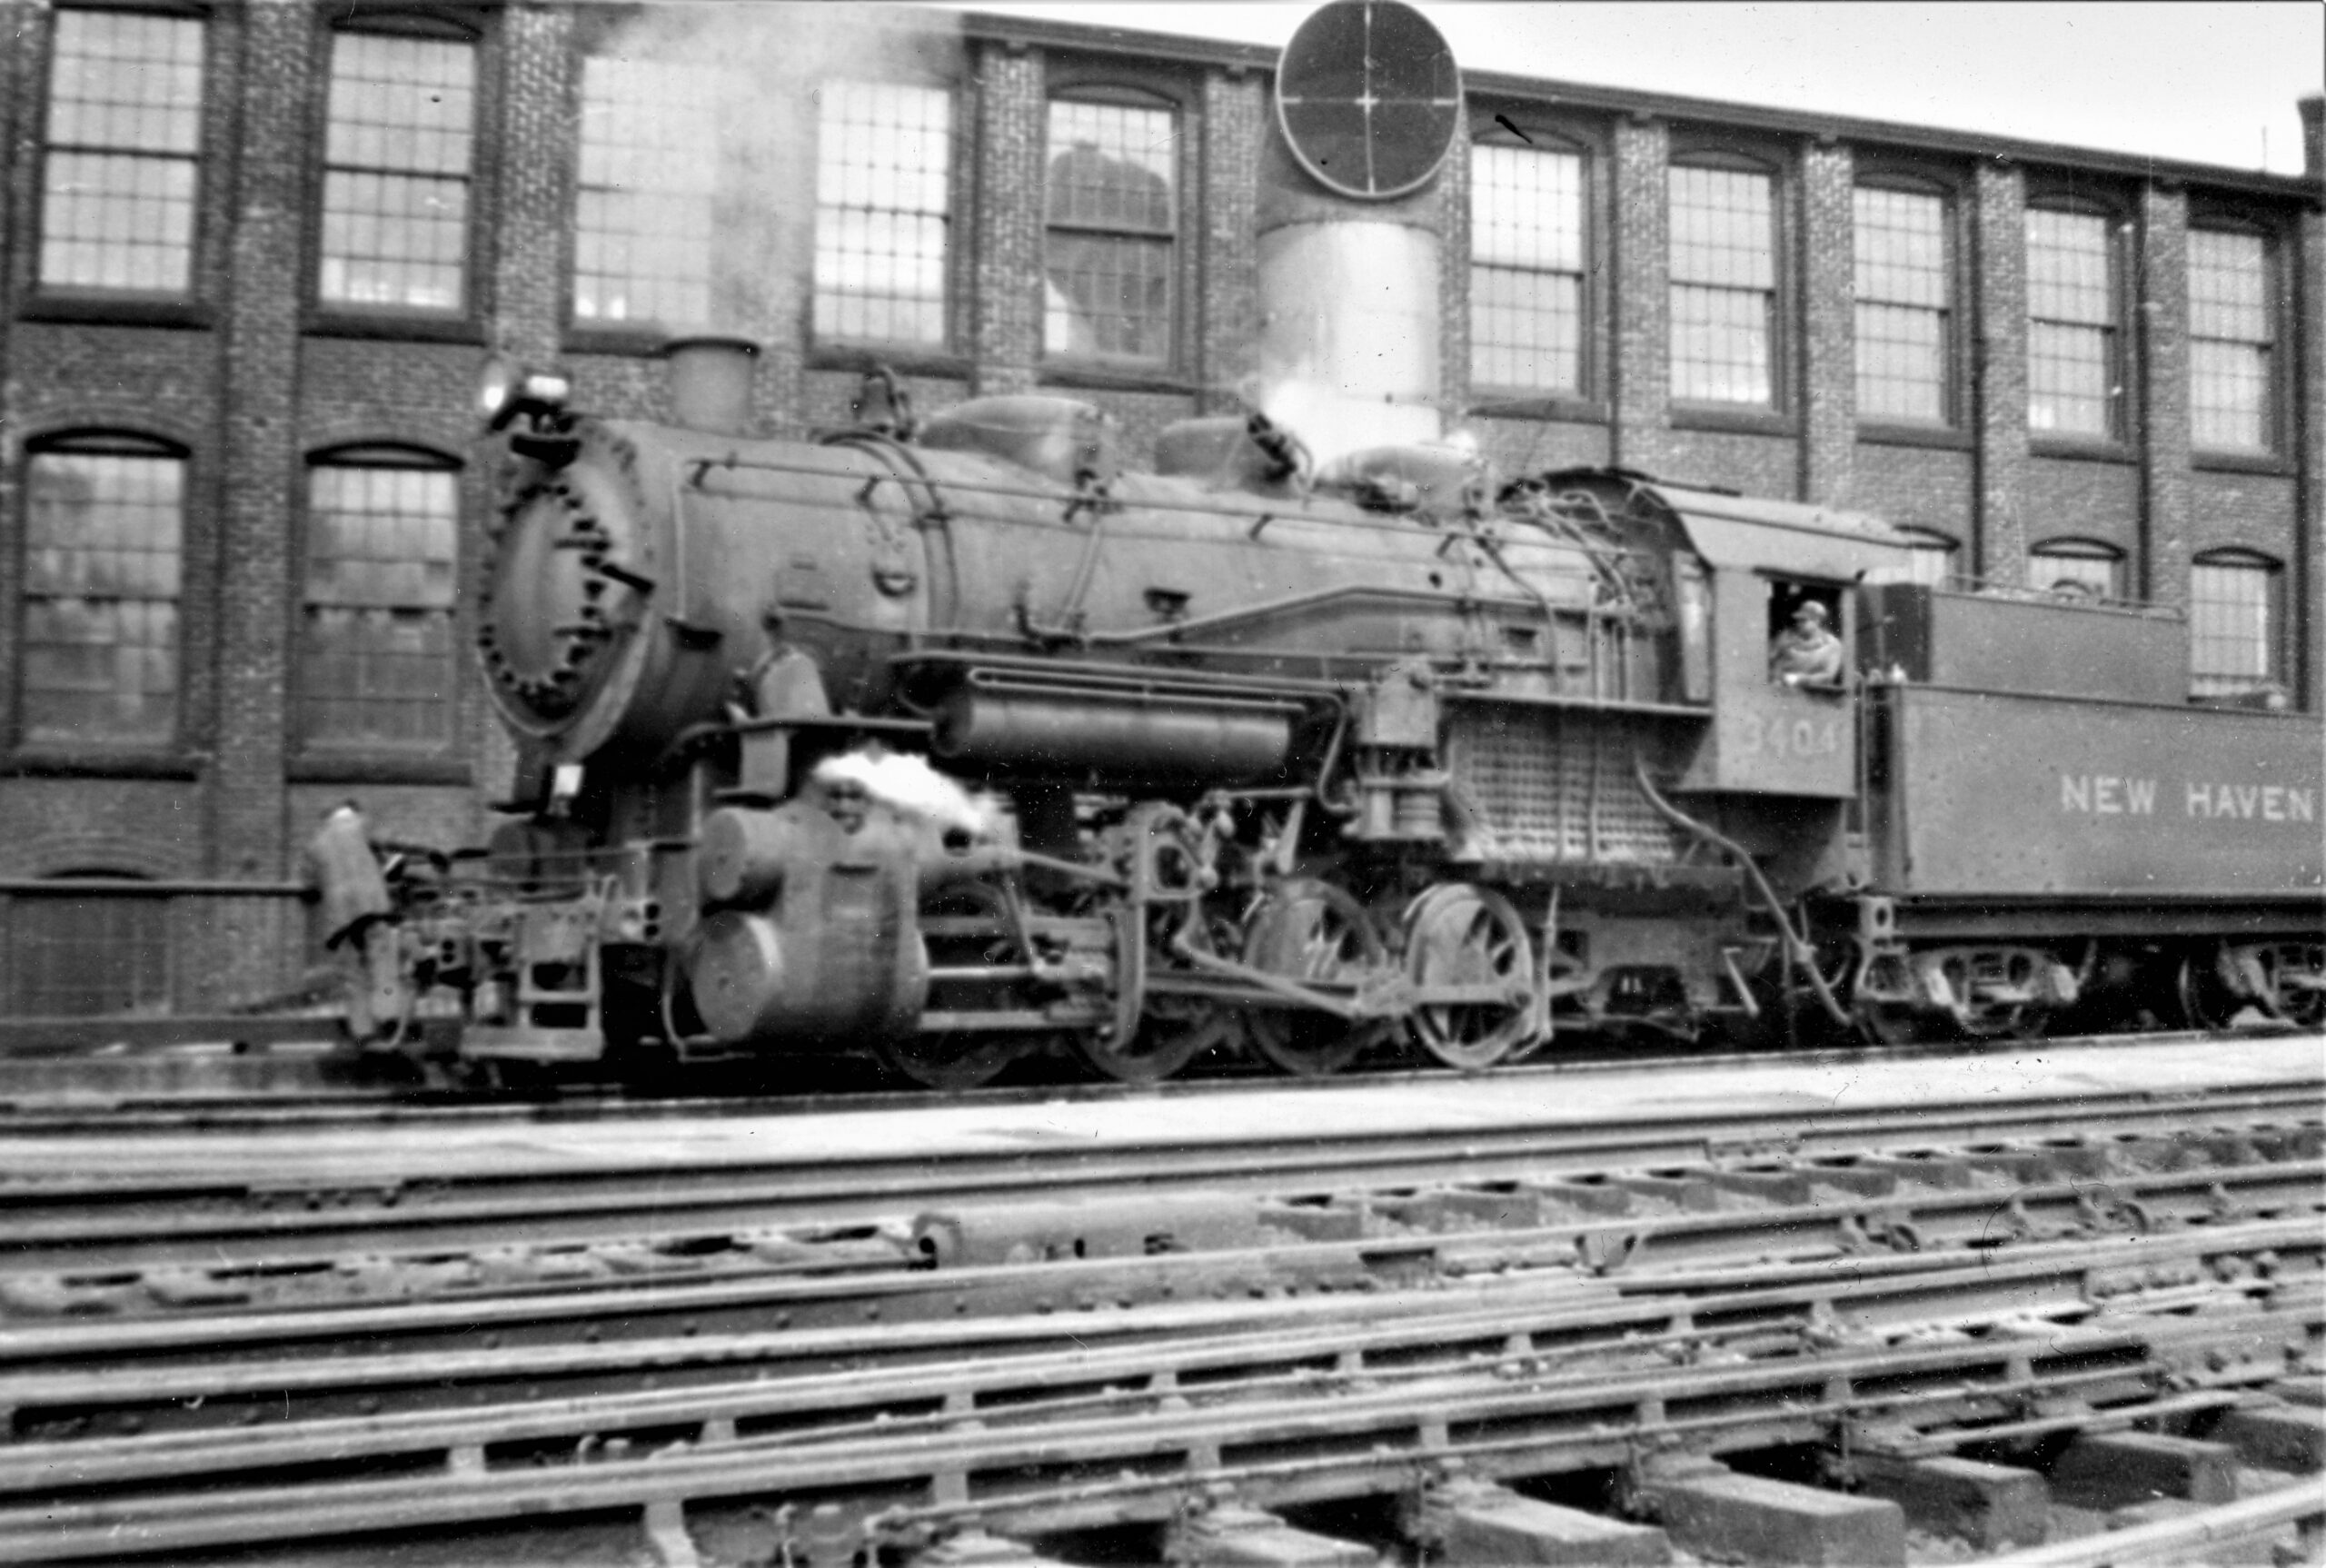 New Haven New York and Hartford Railroad | Worcester, Massachusetts | Class Y-3 0-8-0 steam #3404 locomotive | April 5, 1936 | Elmer Kremkow Collection